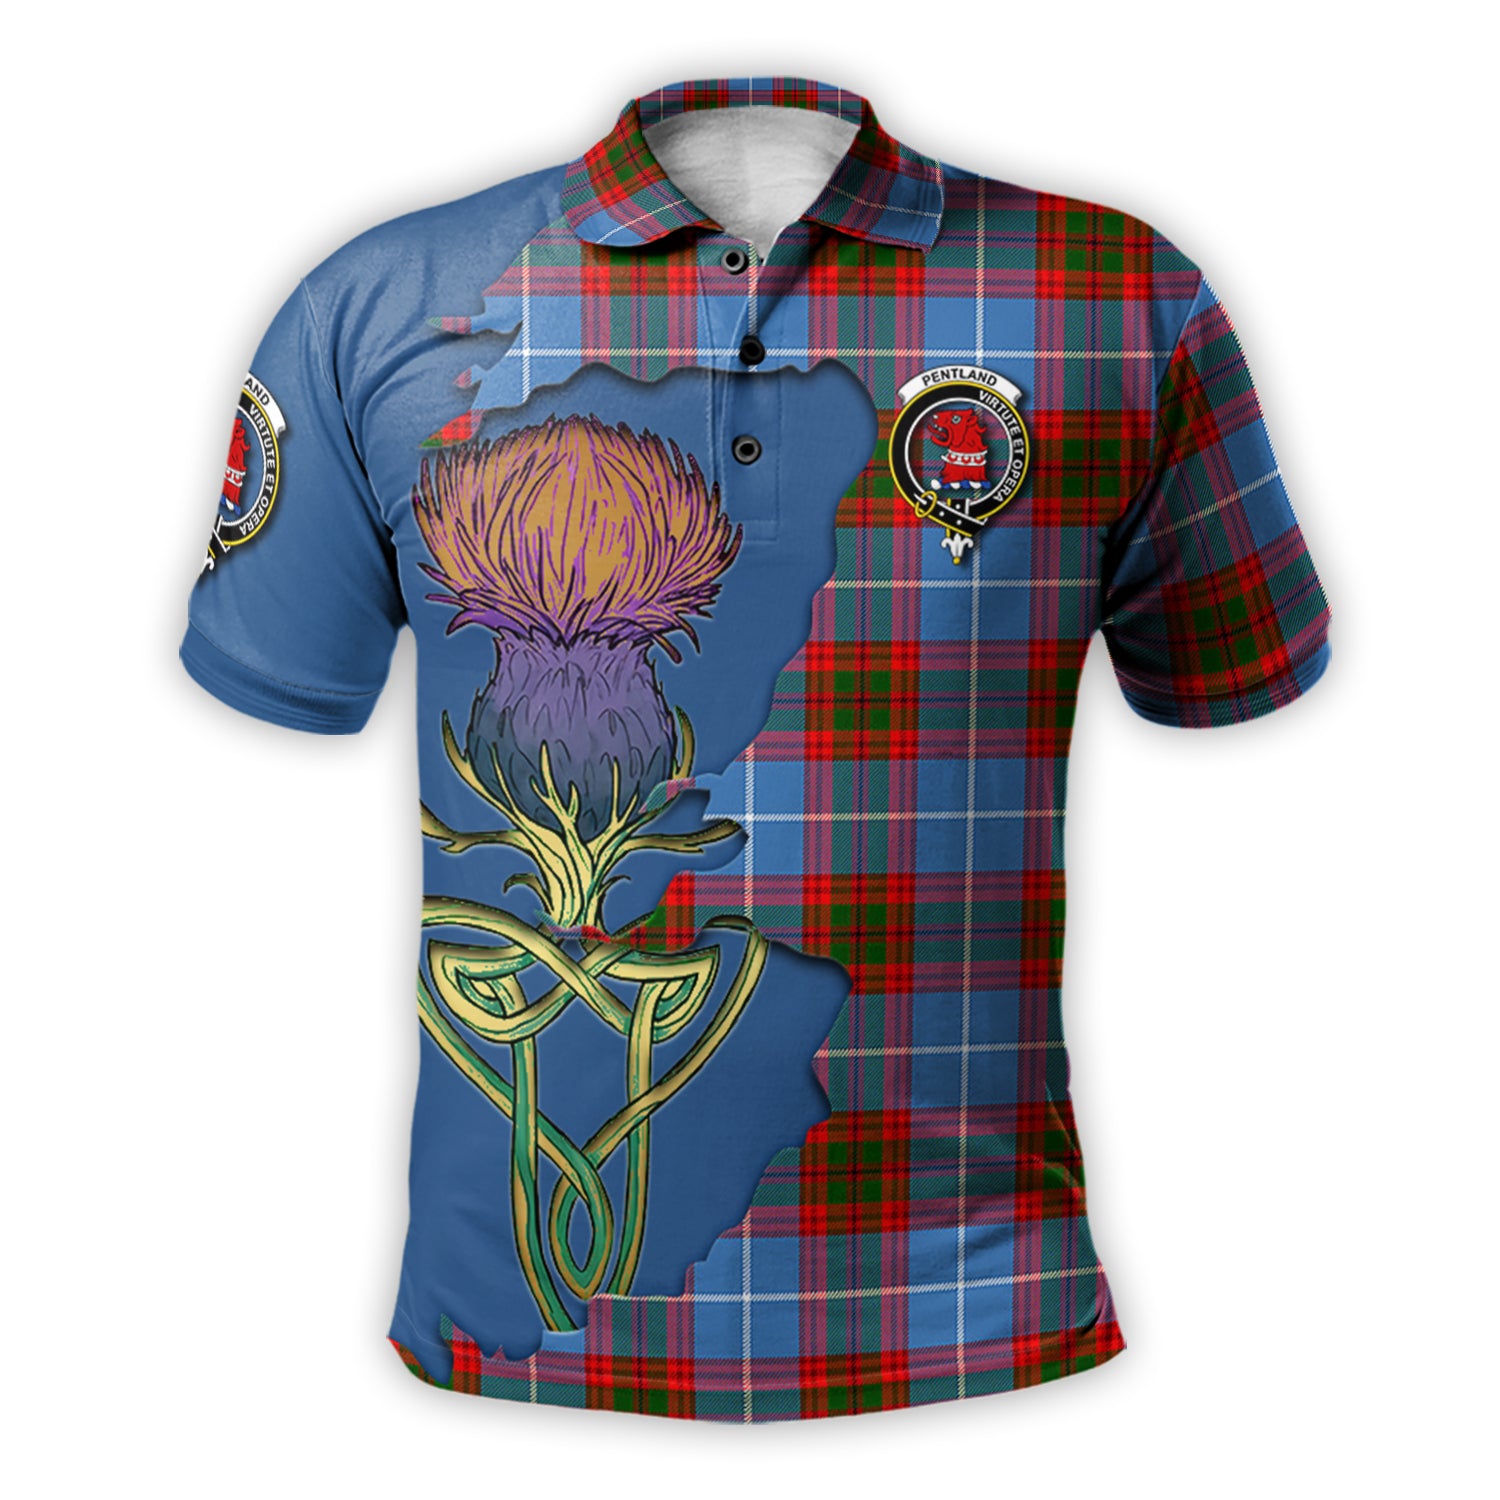 pentland-tartan-family-crest-polo-shirt-tartan-plaid-with-thistle-and-scotland-map-polo-shirt